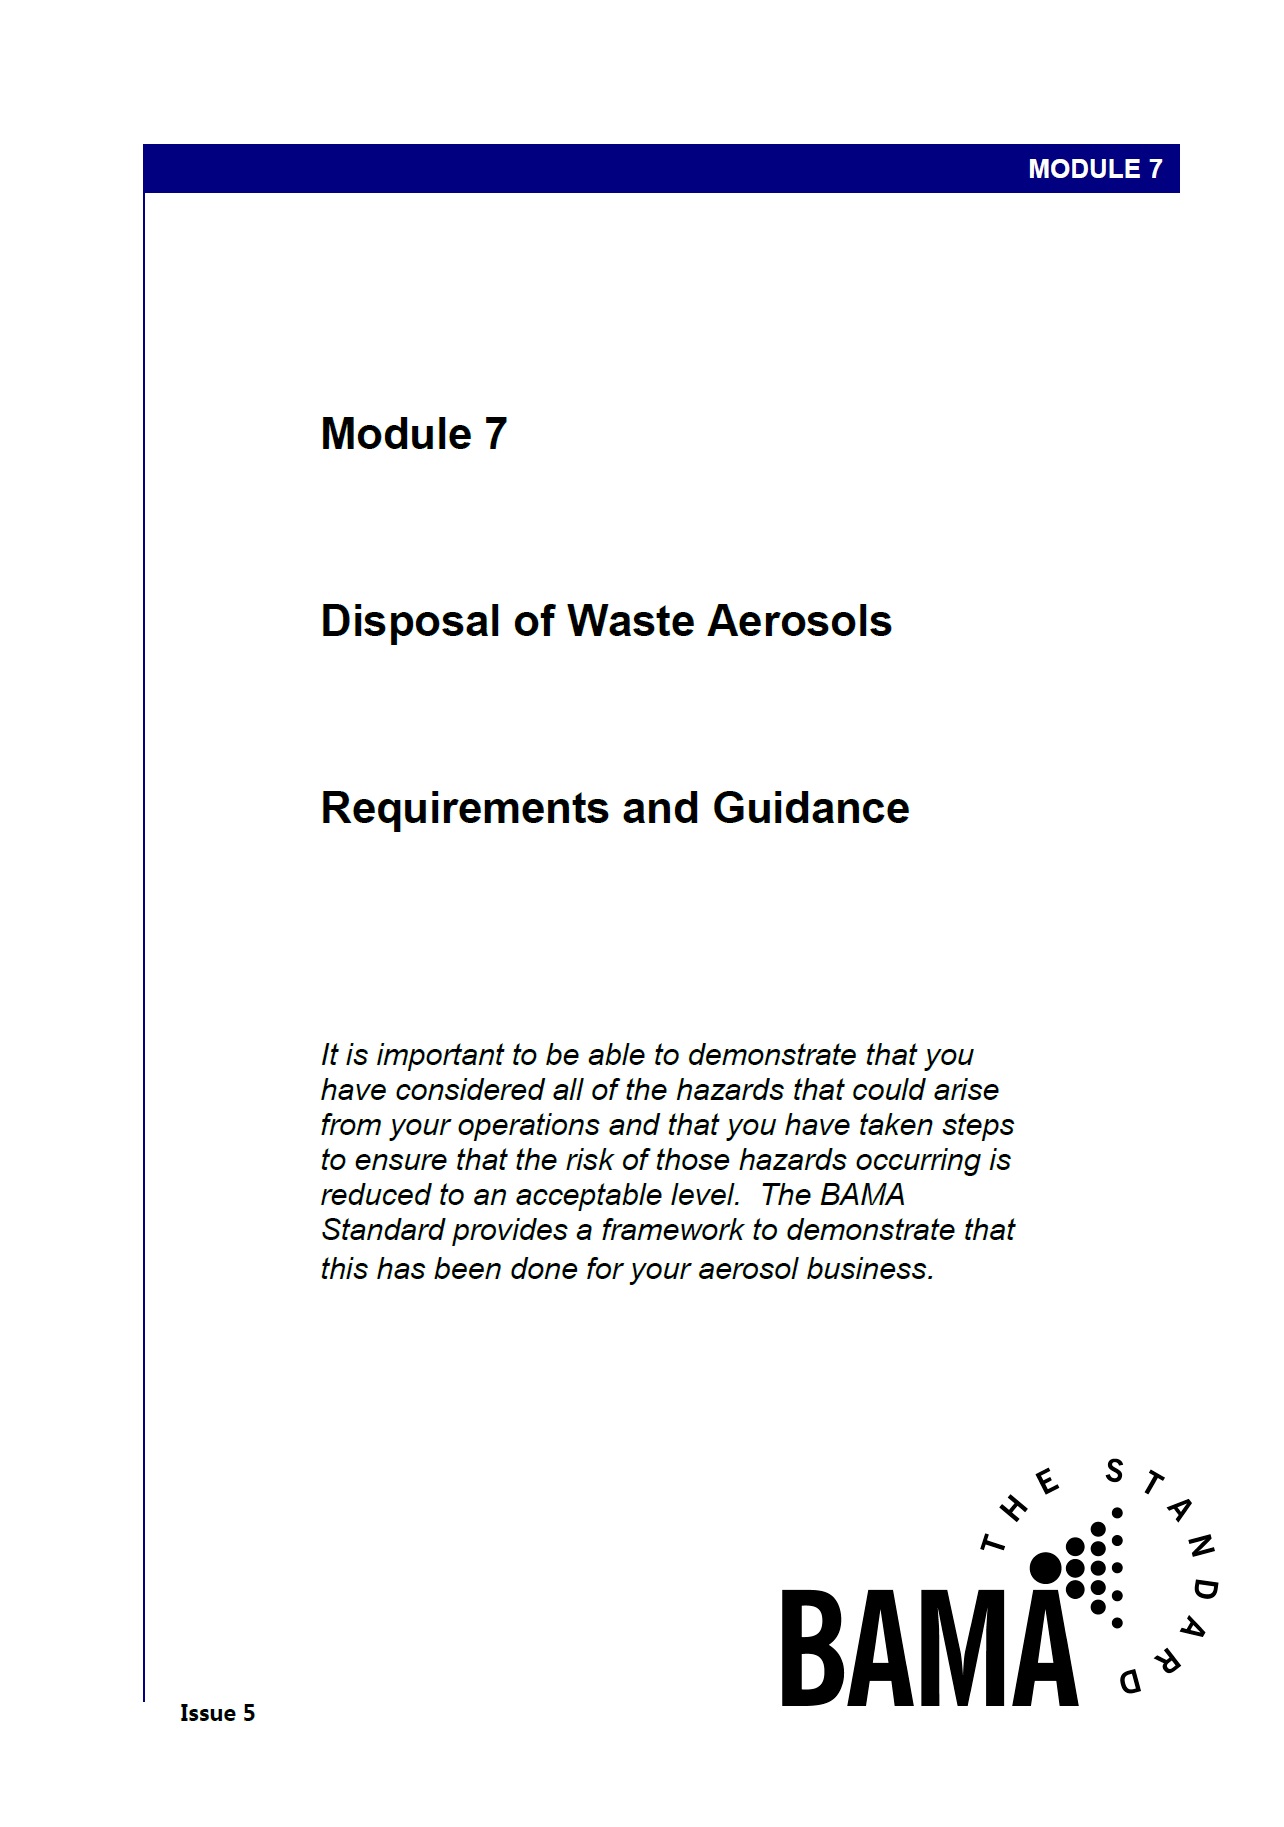 Module 7: Disposal of Waste Aerosols